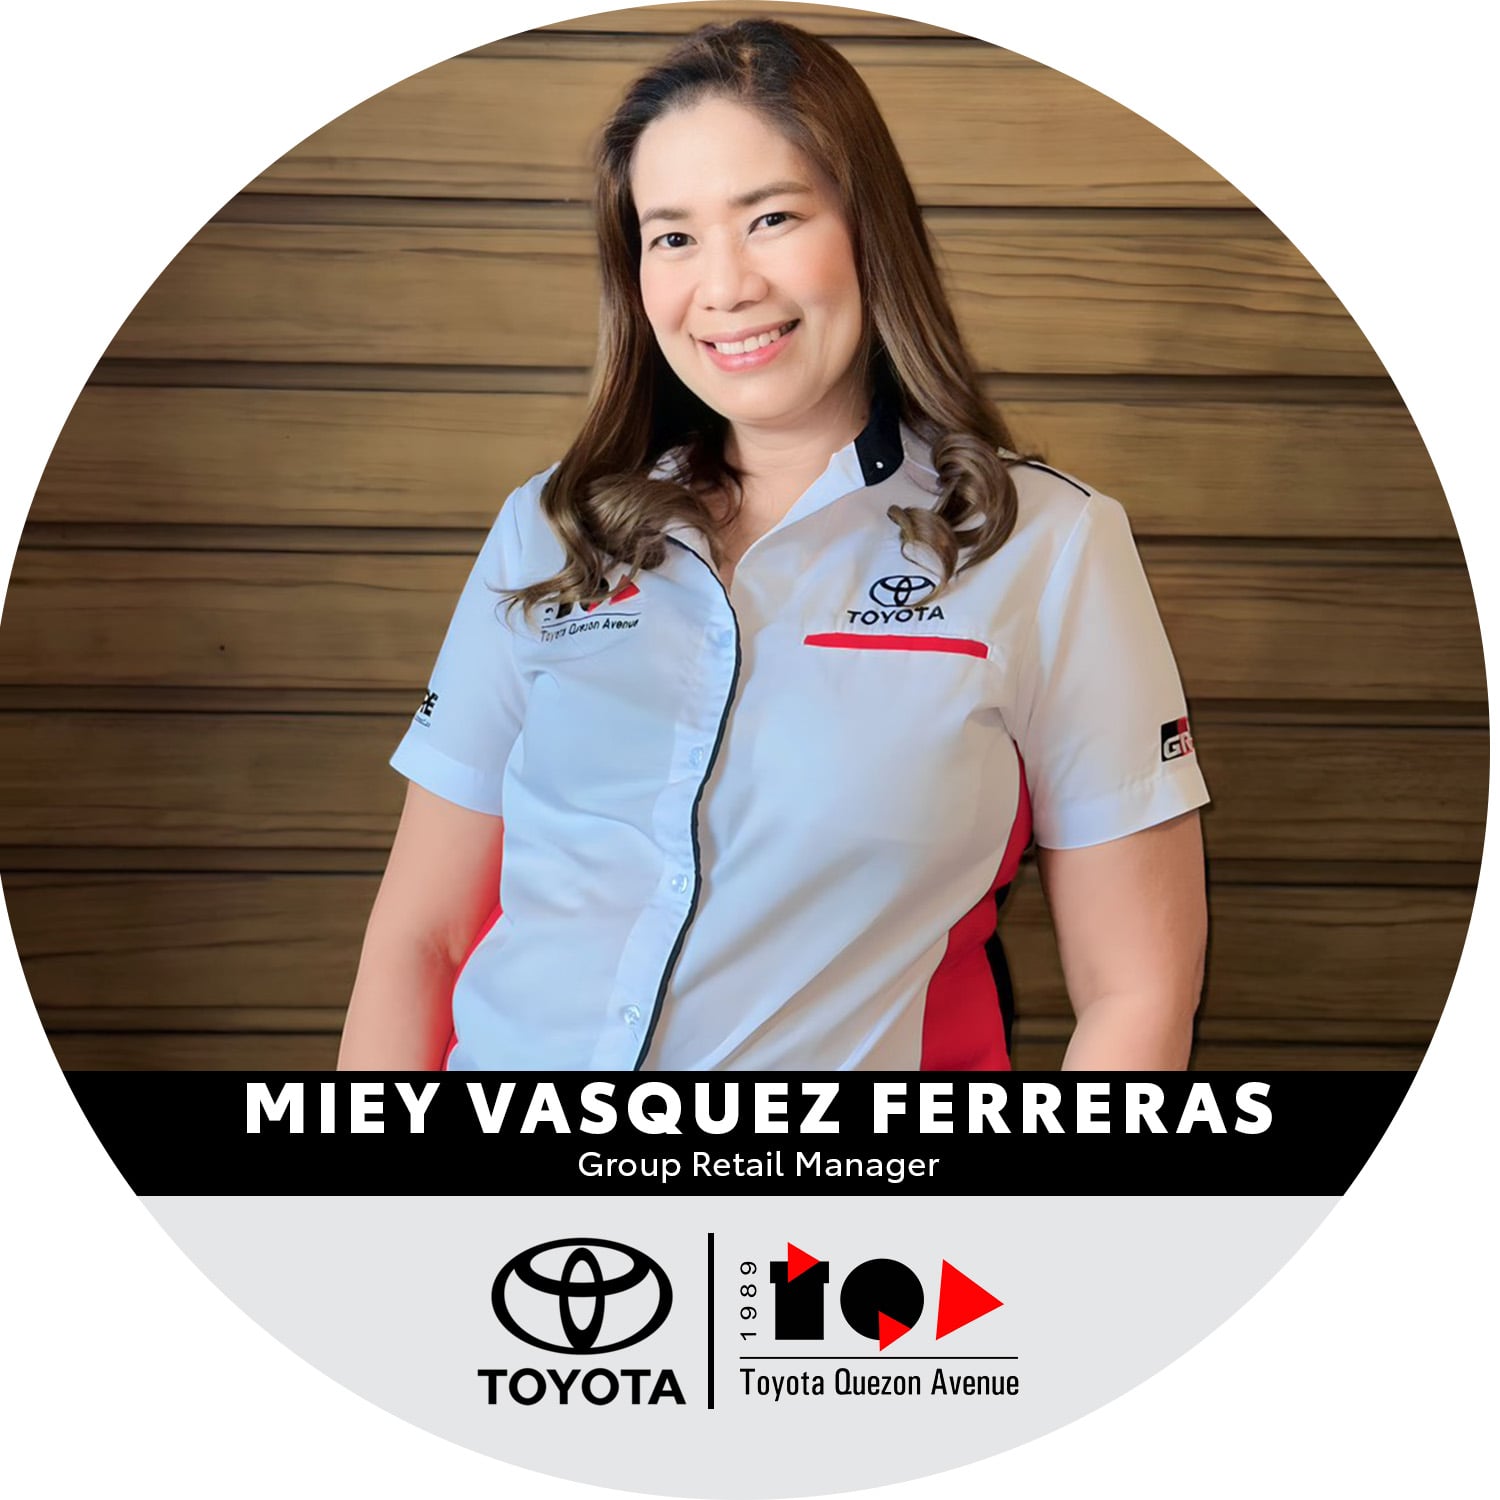 Certified Toyota Marketing Professionals - Miey Vasquez Ferreras